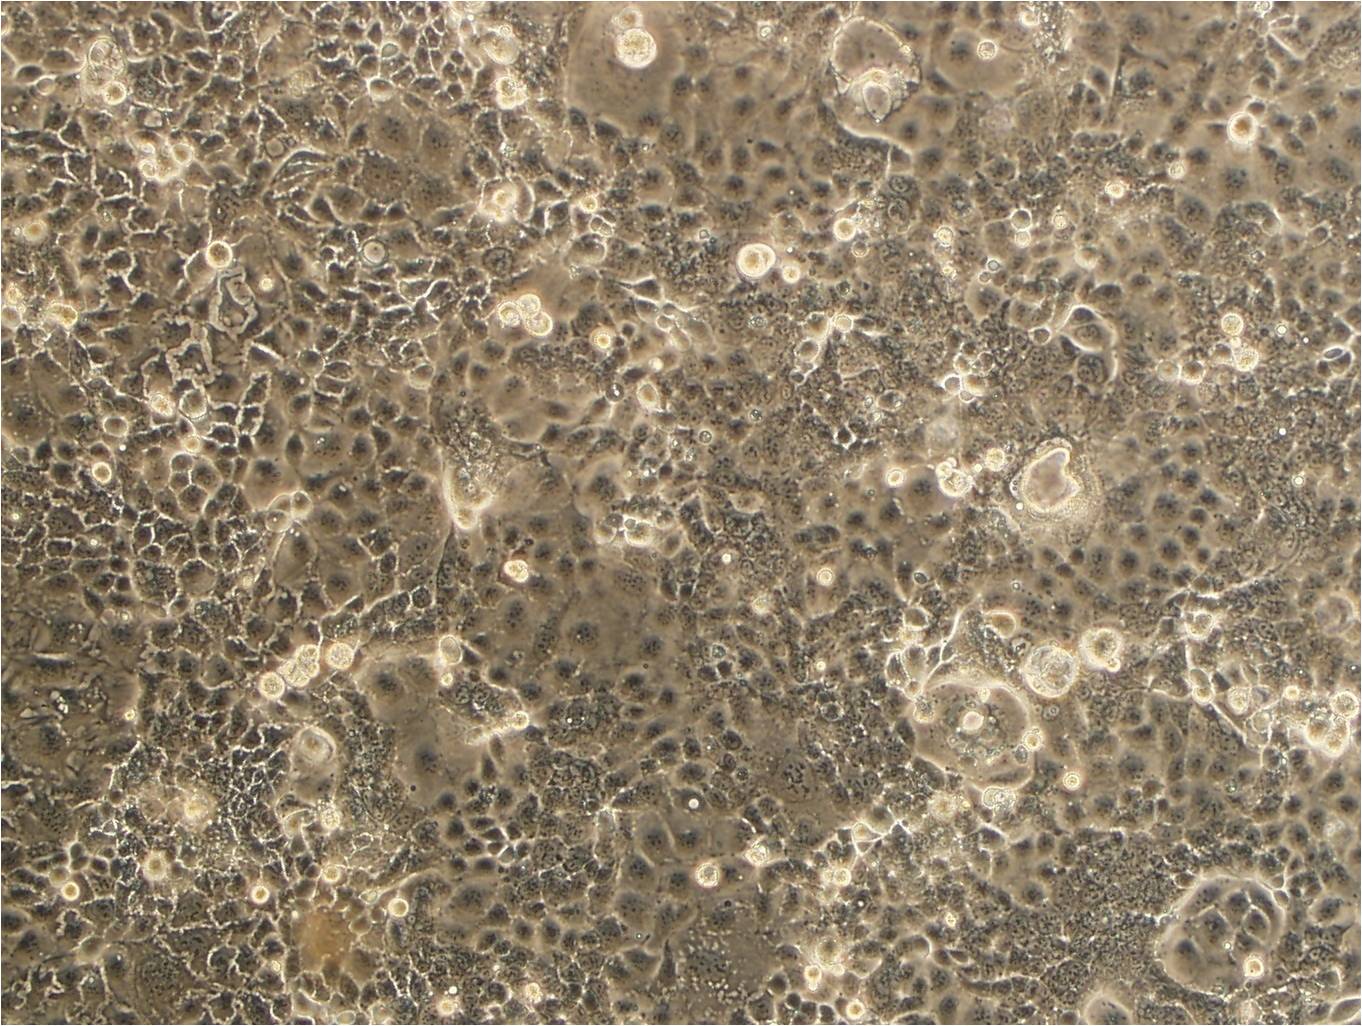 MH-22a Adherent小鼠肝癌细胞系